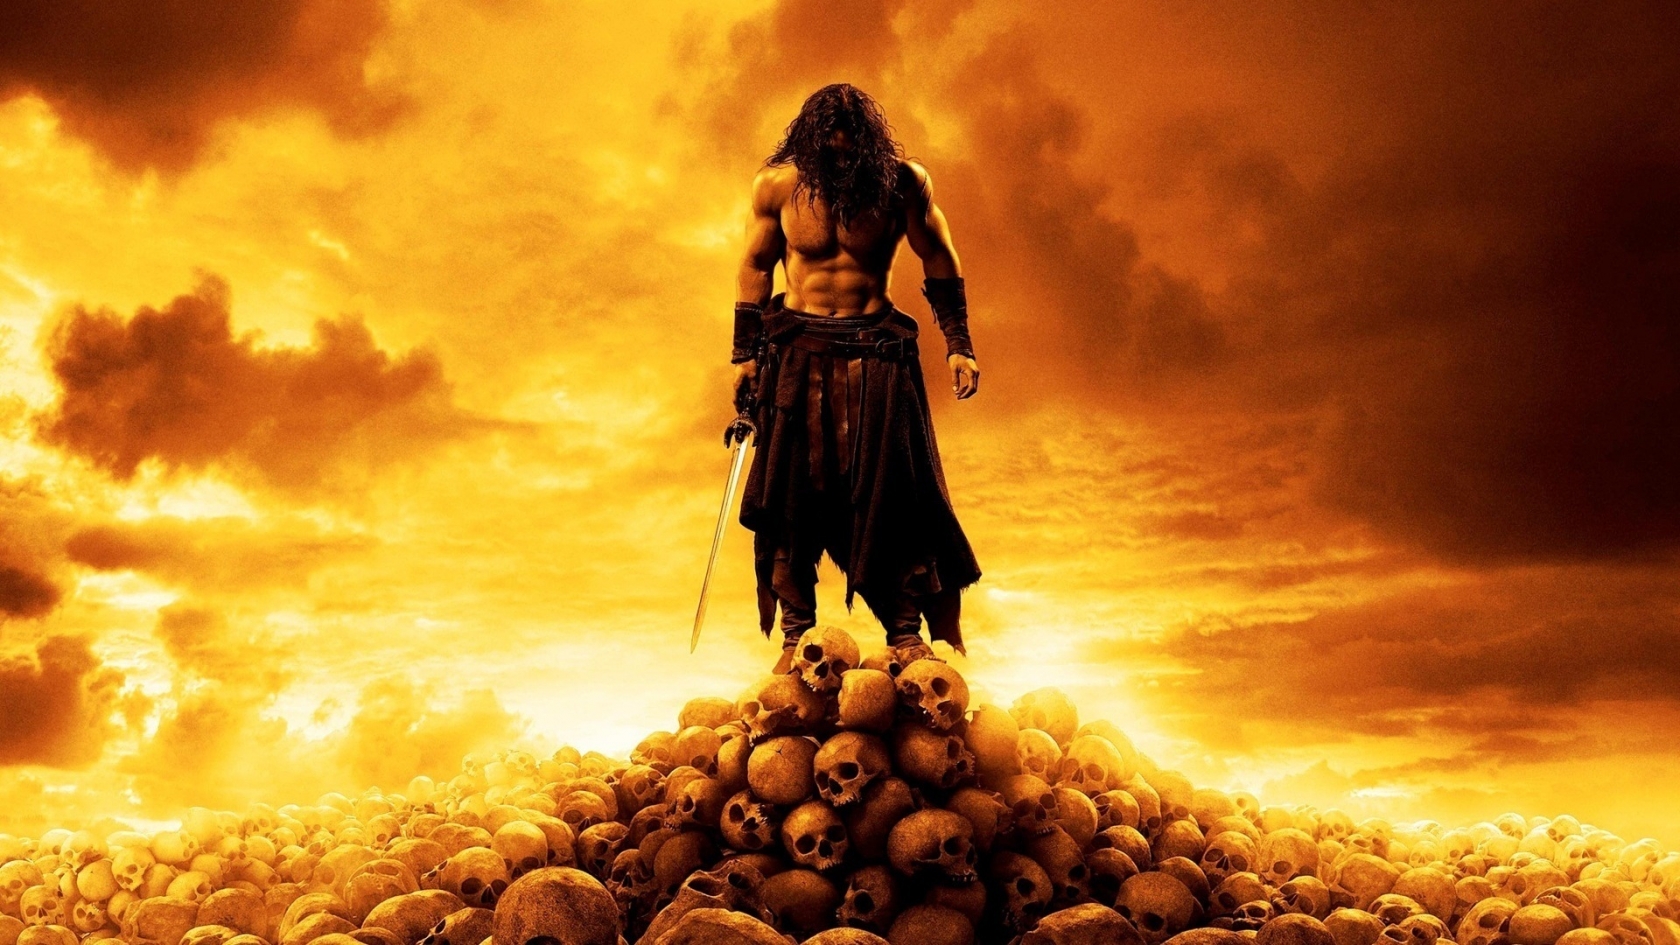 Conan the Barbarian 2011 for 1680 x 945 HDTV resolution